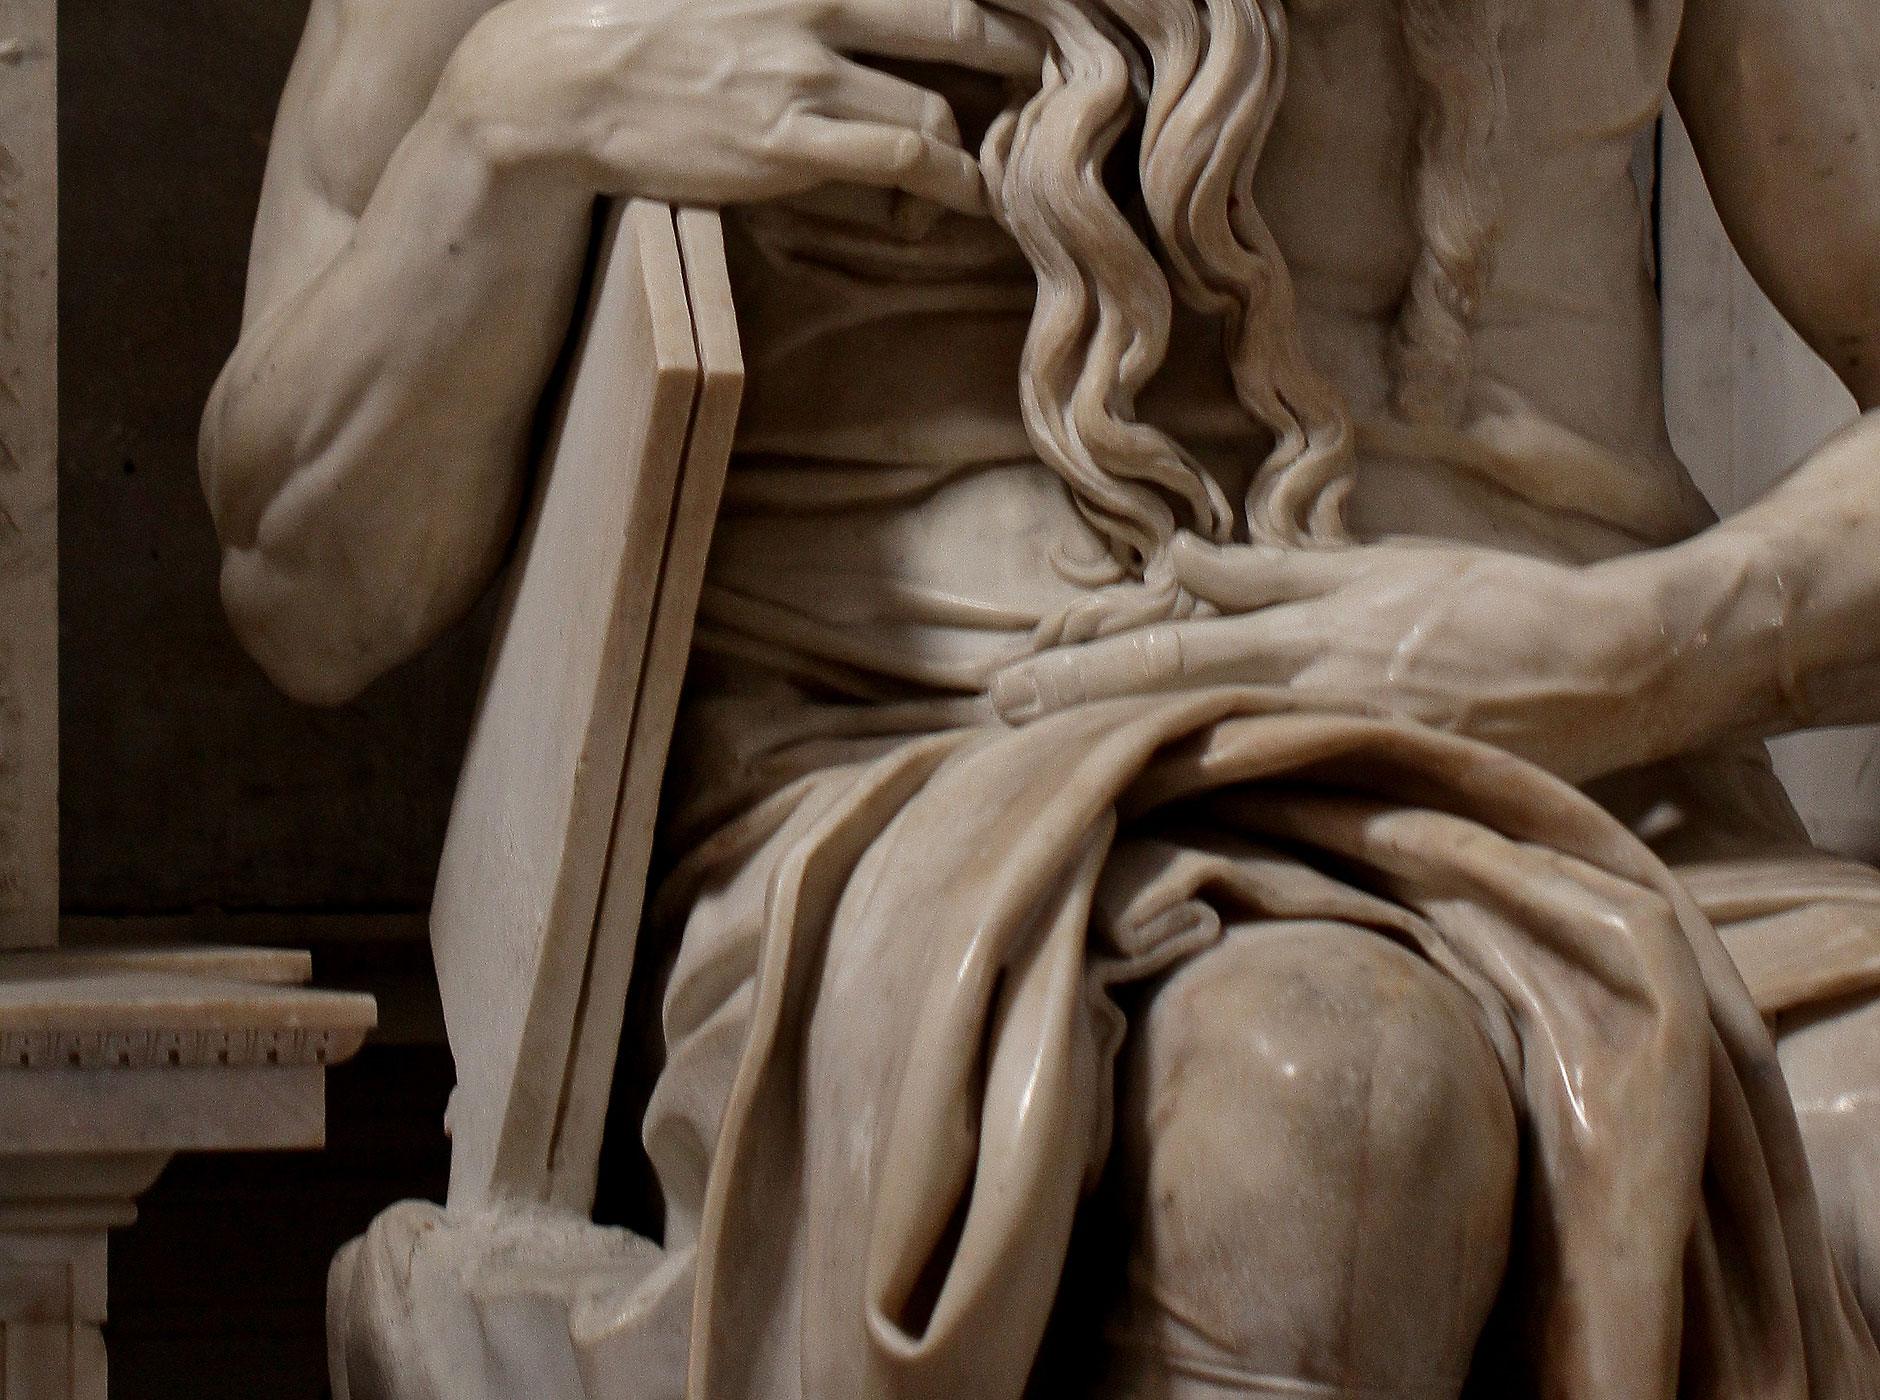 Michelangelo Buonarroti, MosÃ¨, dettaglio delle tavole. Ph. Credit JÃ¶rg Bittner Unna